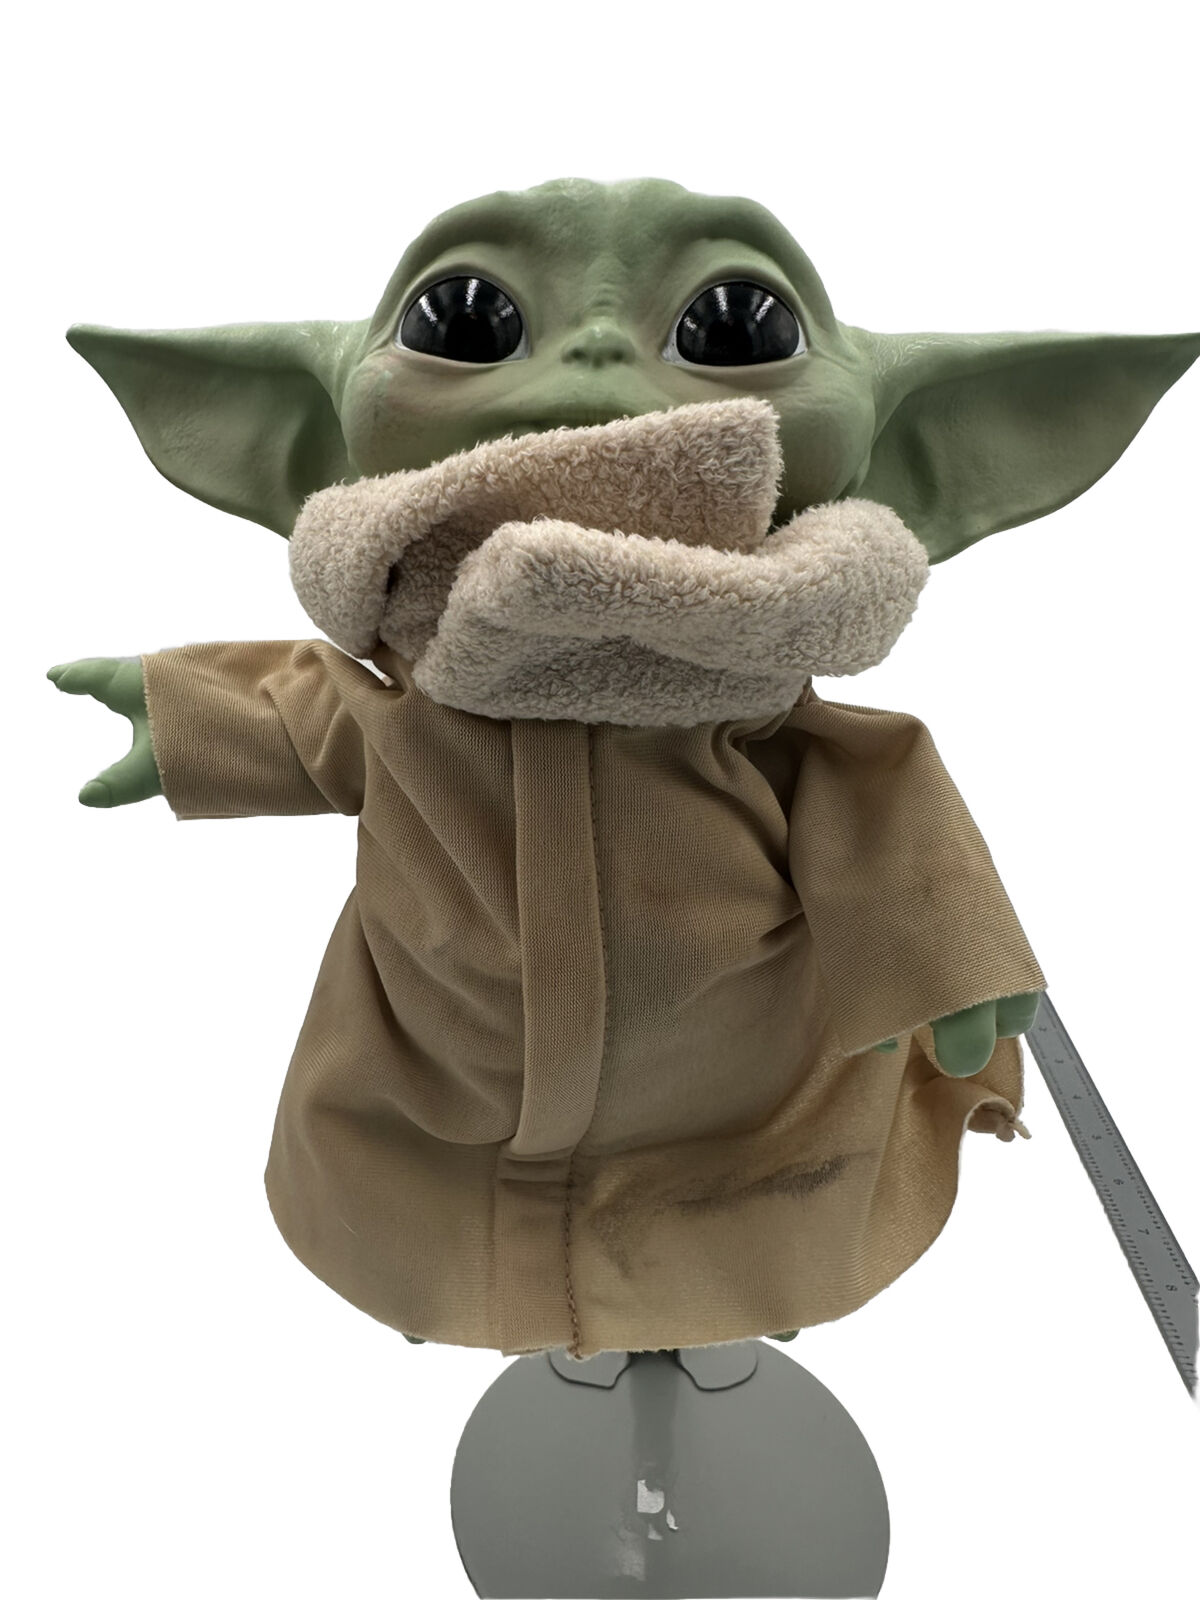 Star Wars Plush Toy - The Mandalorian, 8-in - Grogu Collectible Baby Yoda SEE